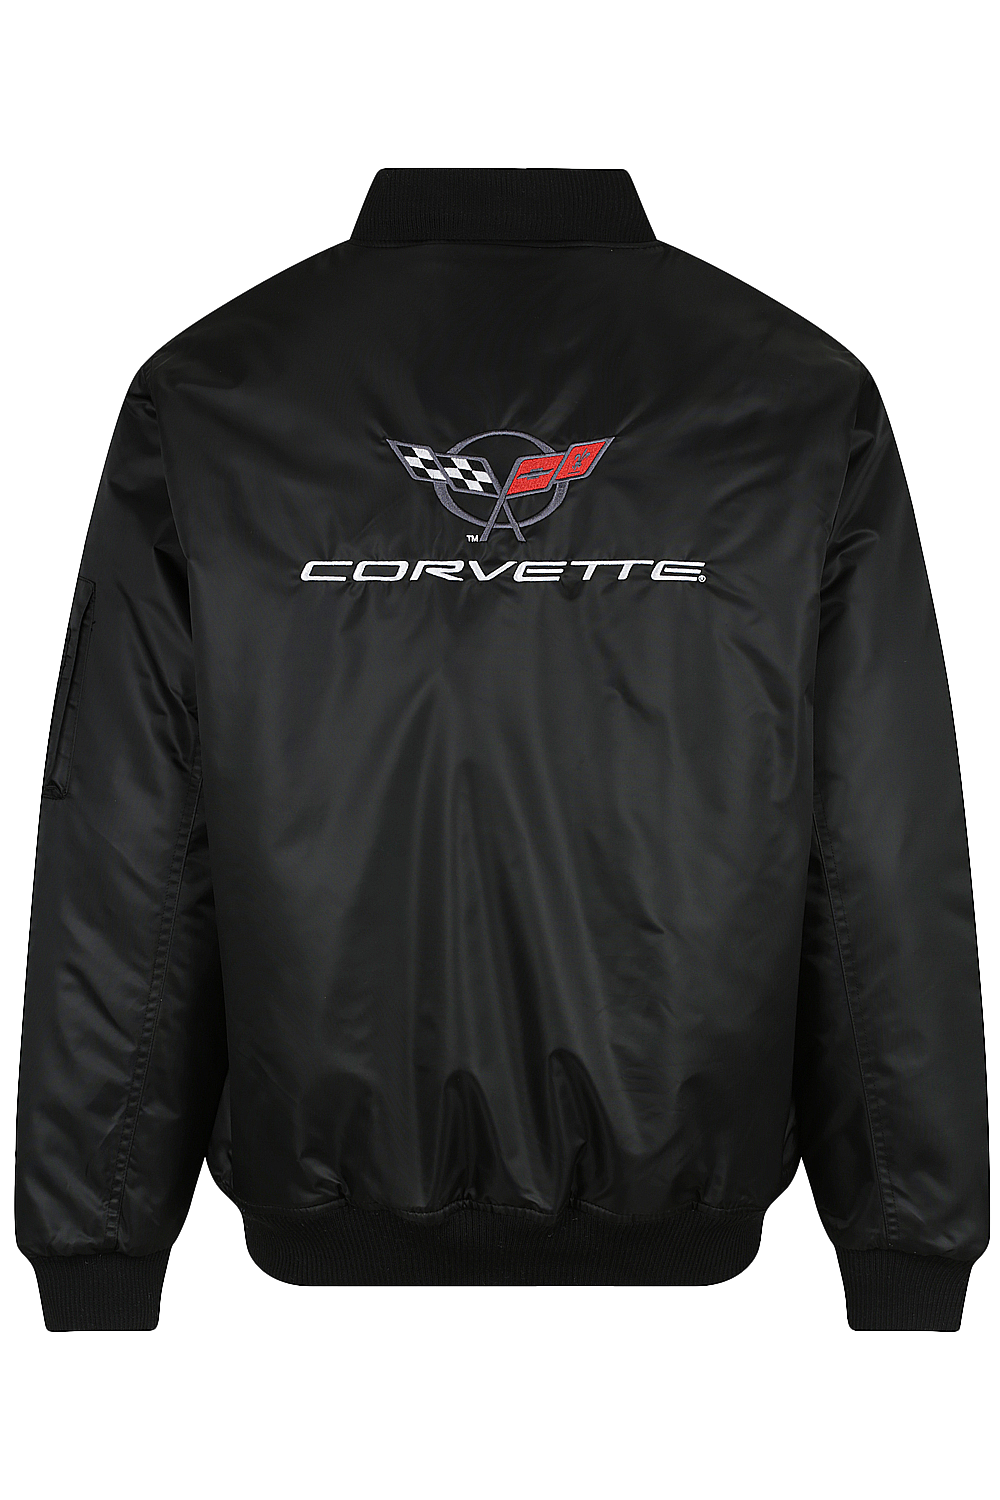 Corvette Black Aviator Jacket